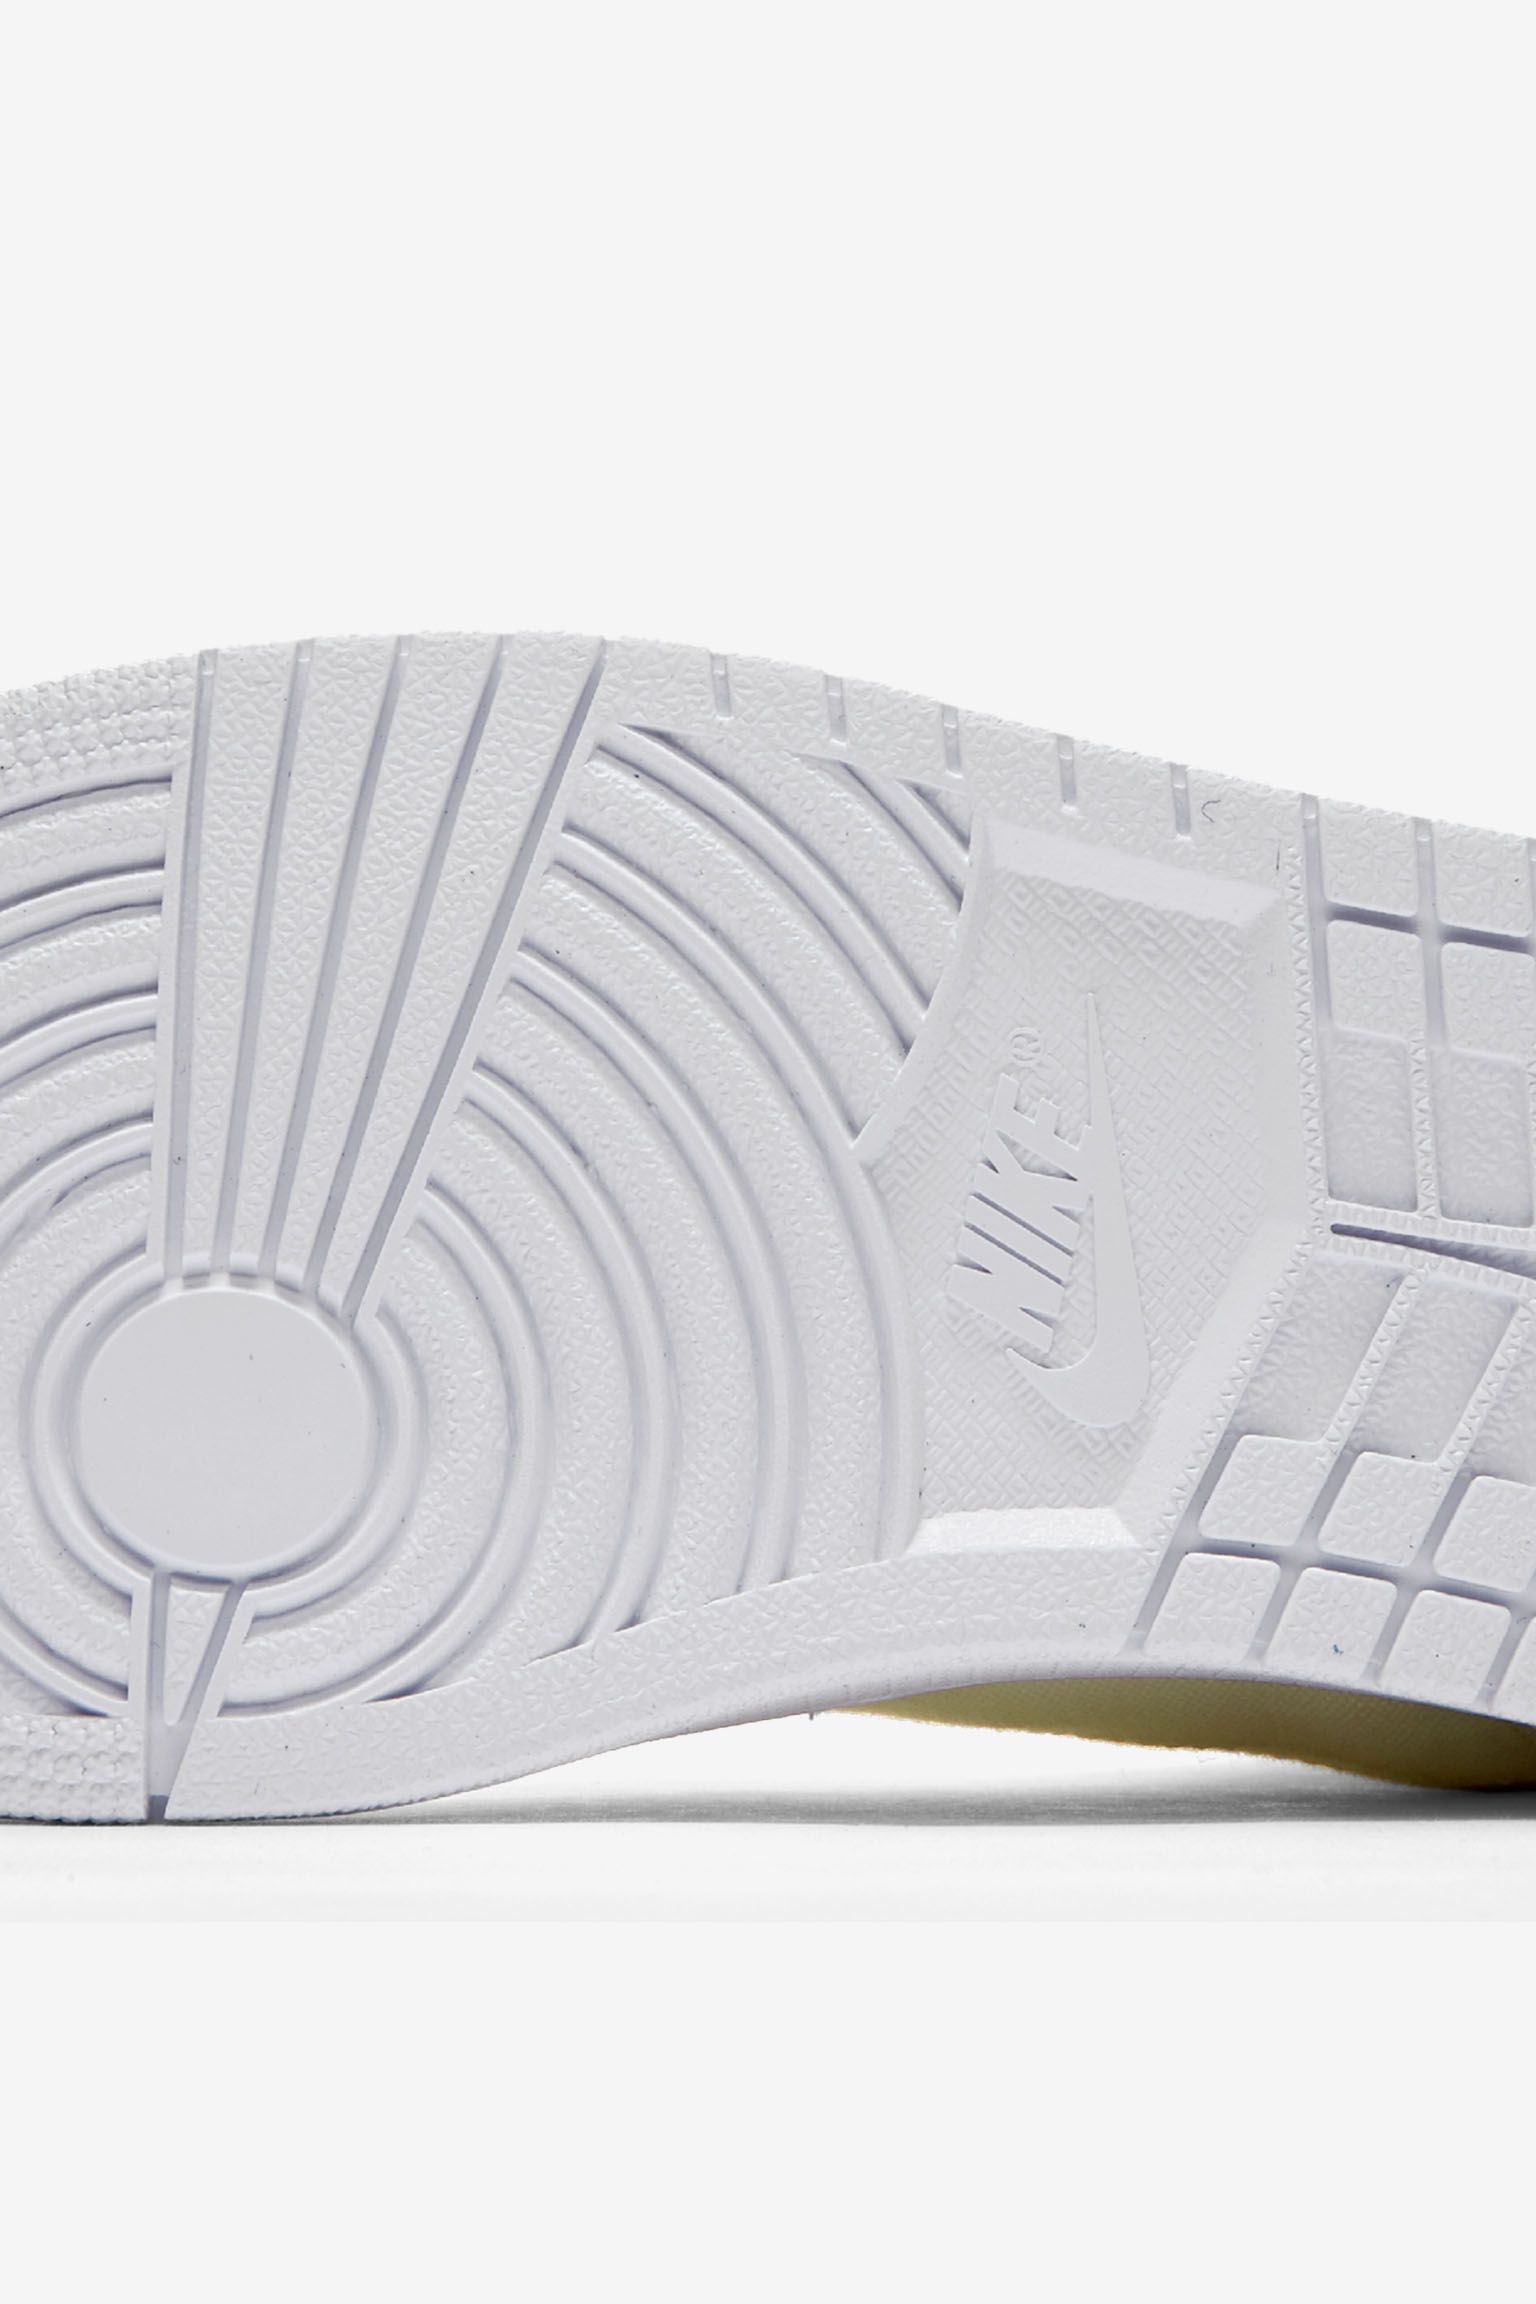 Air Jordan 1 Retro 'Deconstructed Ivory' Release Date. Nike SNKRS